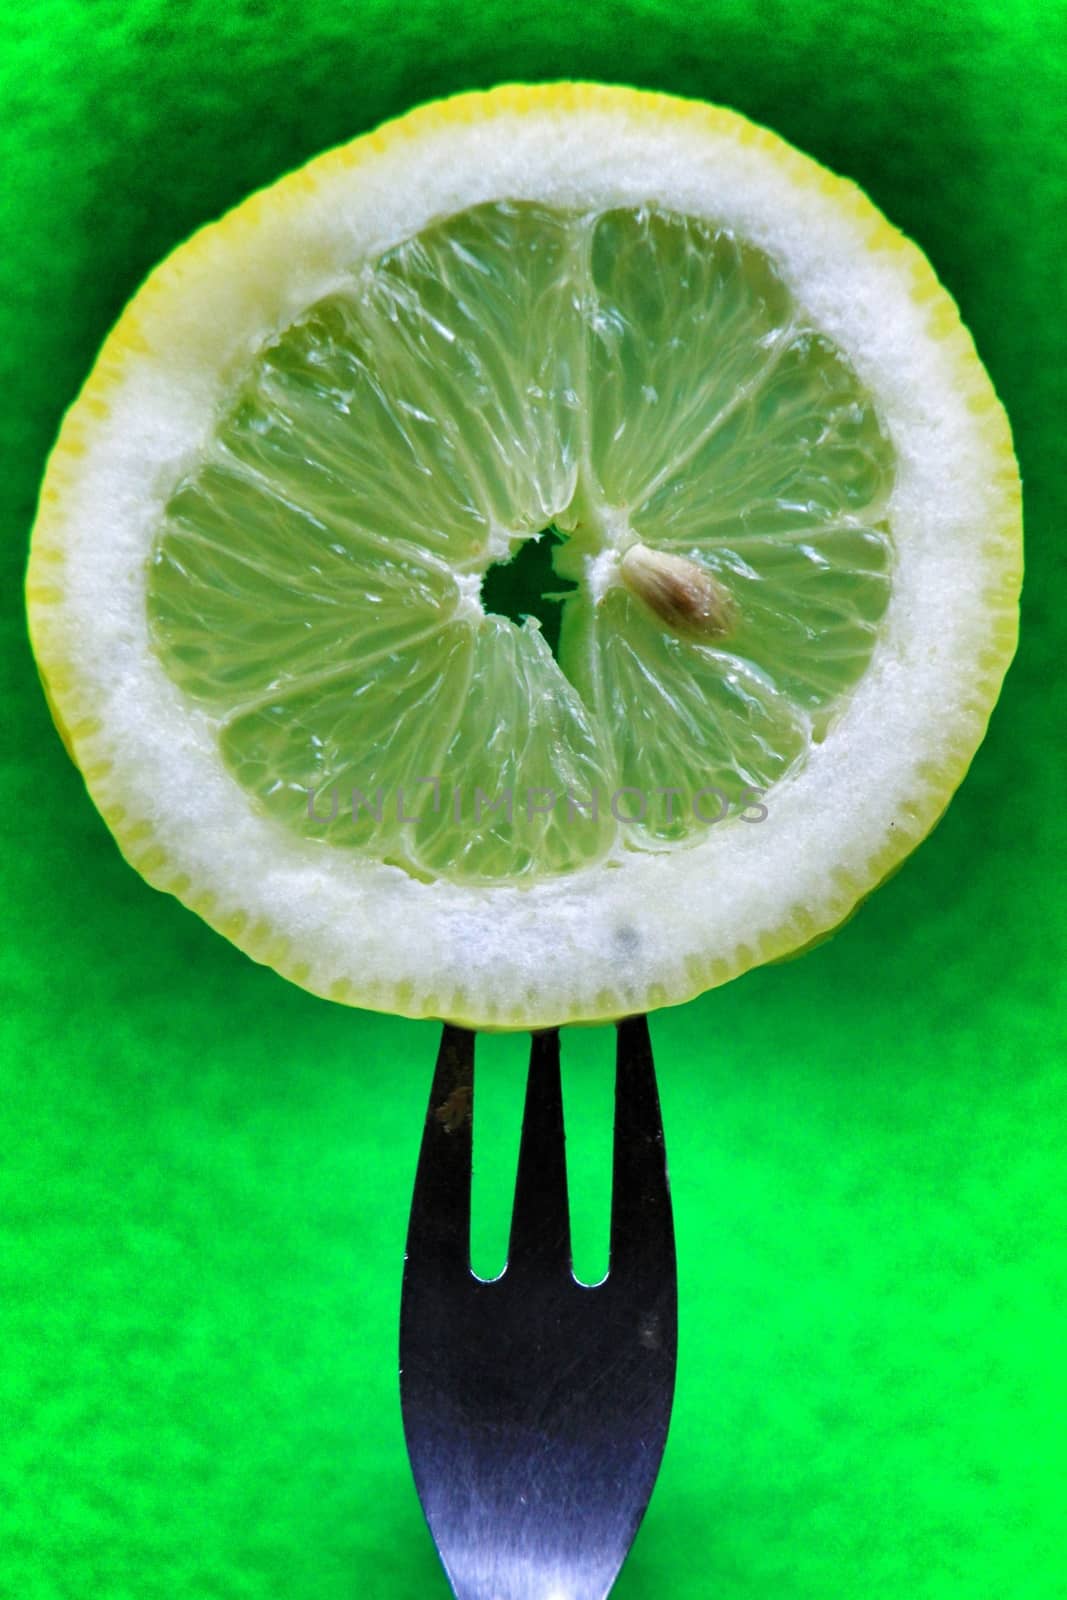 Slice of lemon pricked on fork on colorful green background